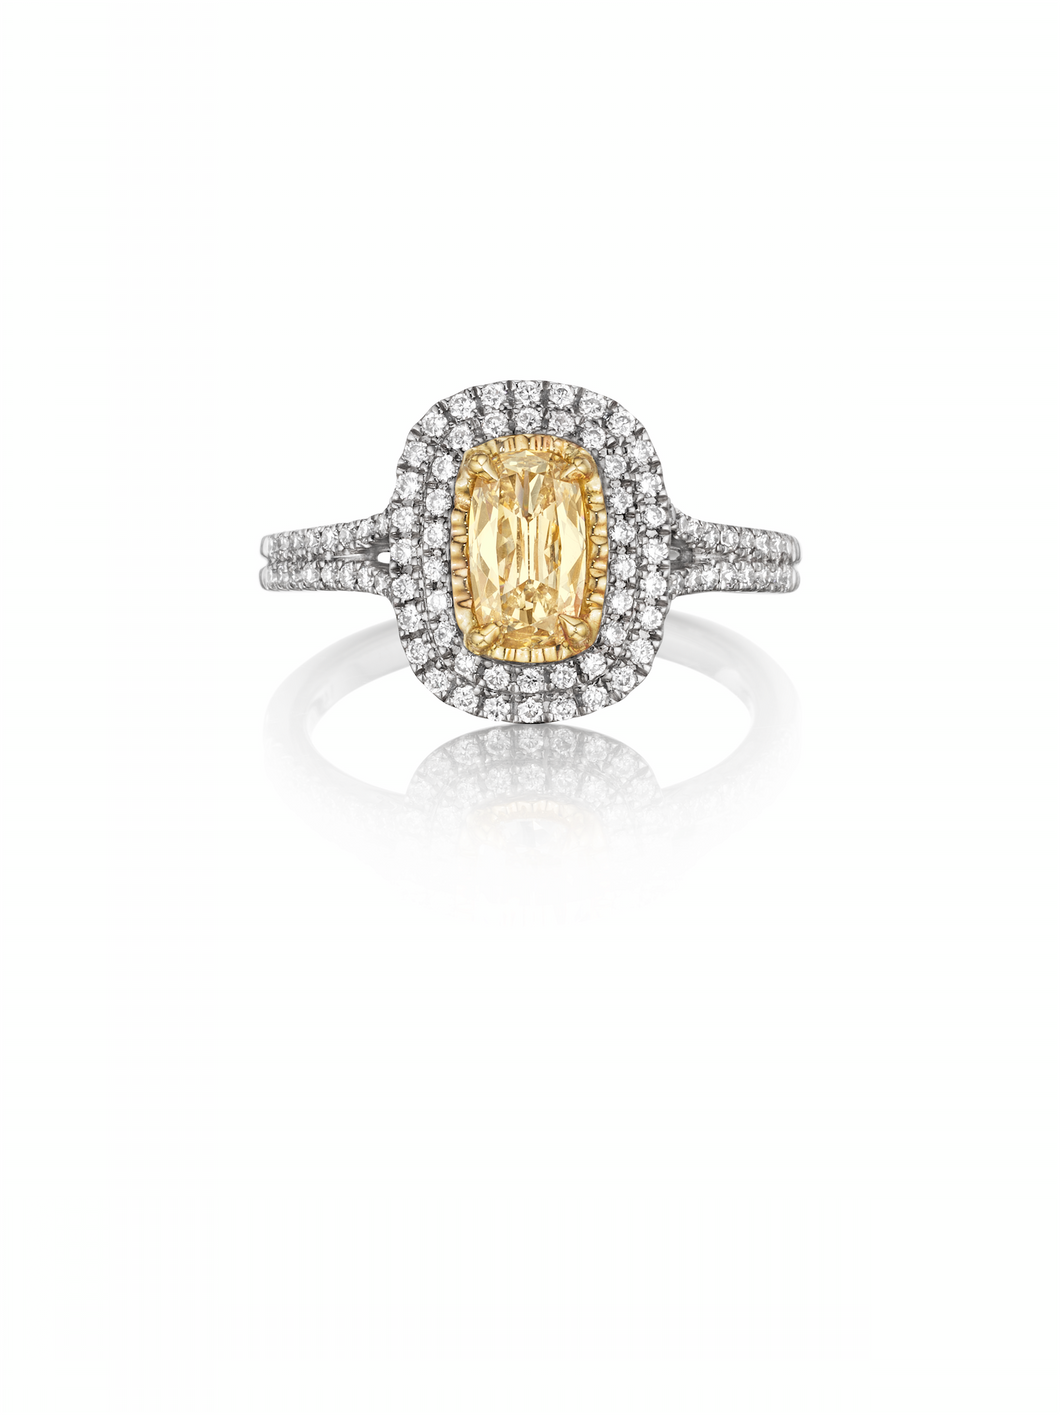 Henri Daussi Cushion Collection Diamond Ring (1.05 CTW)